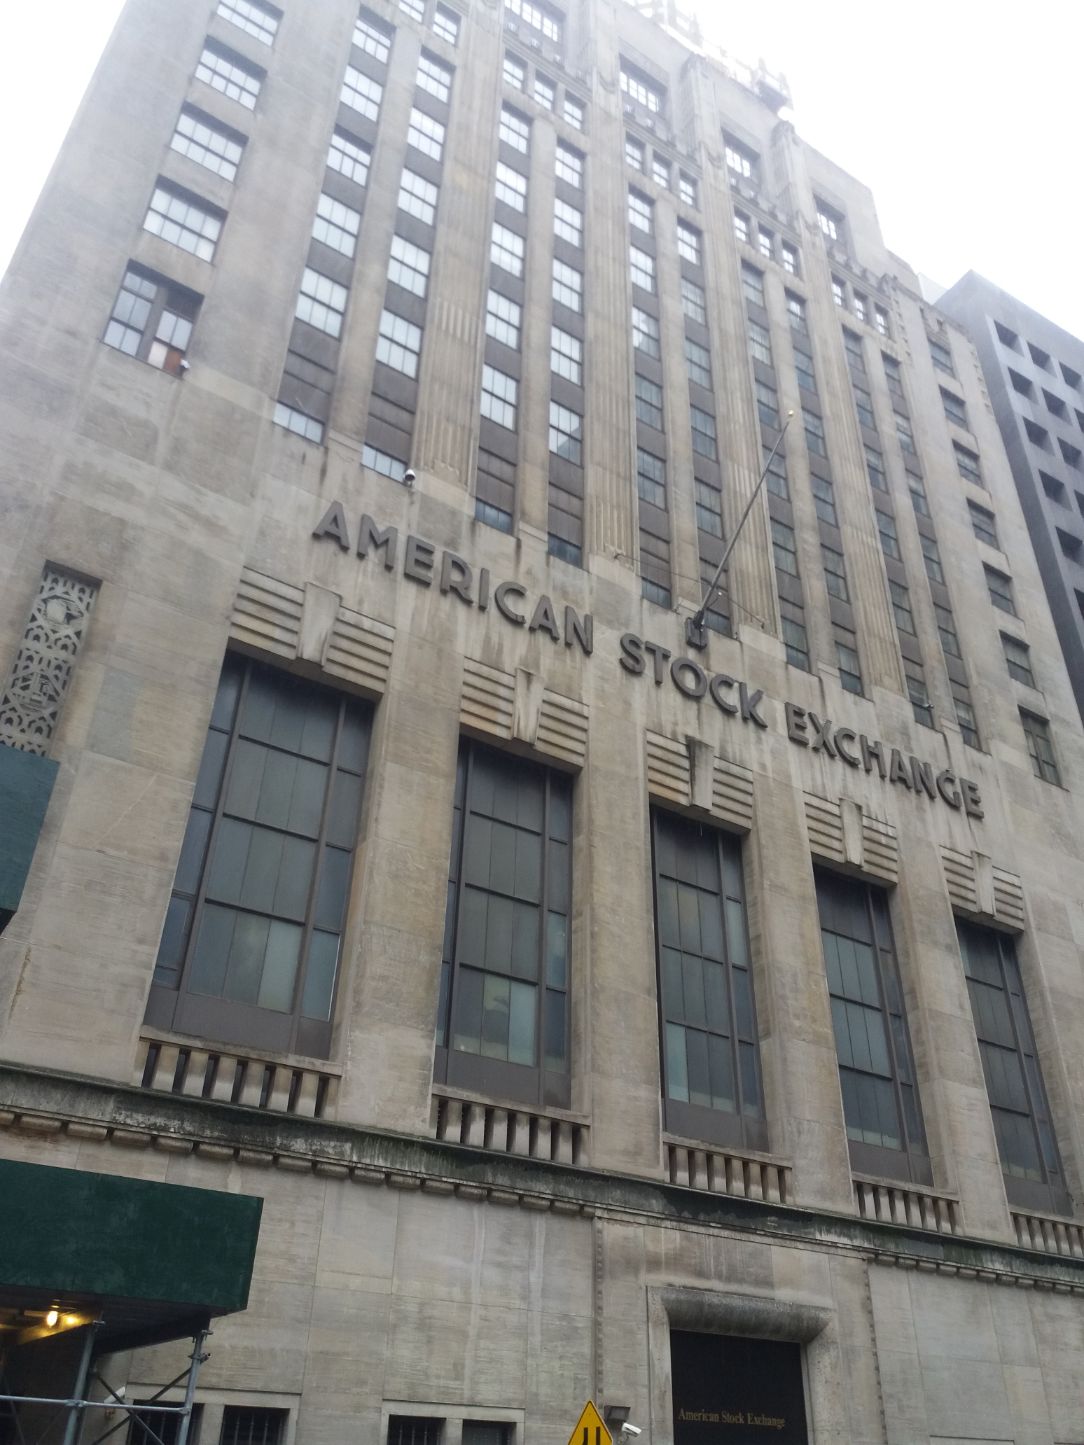 American-Stock Exchange Chicago